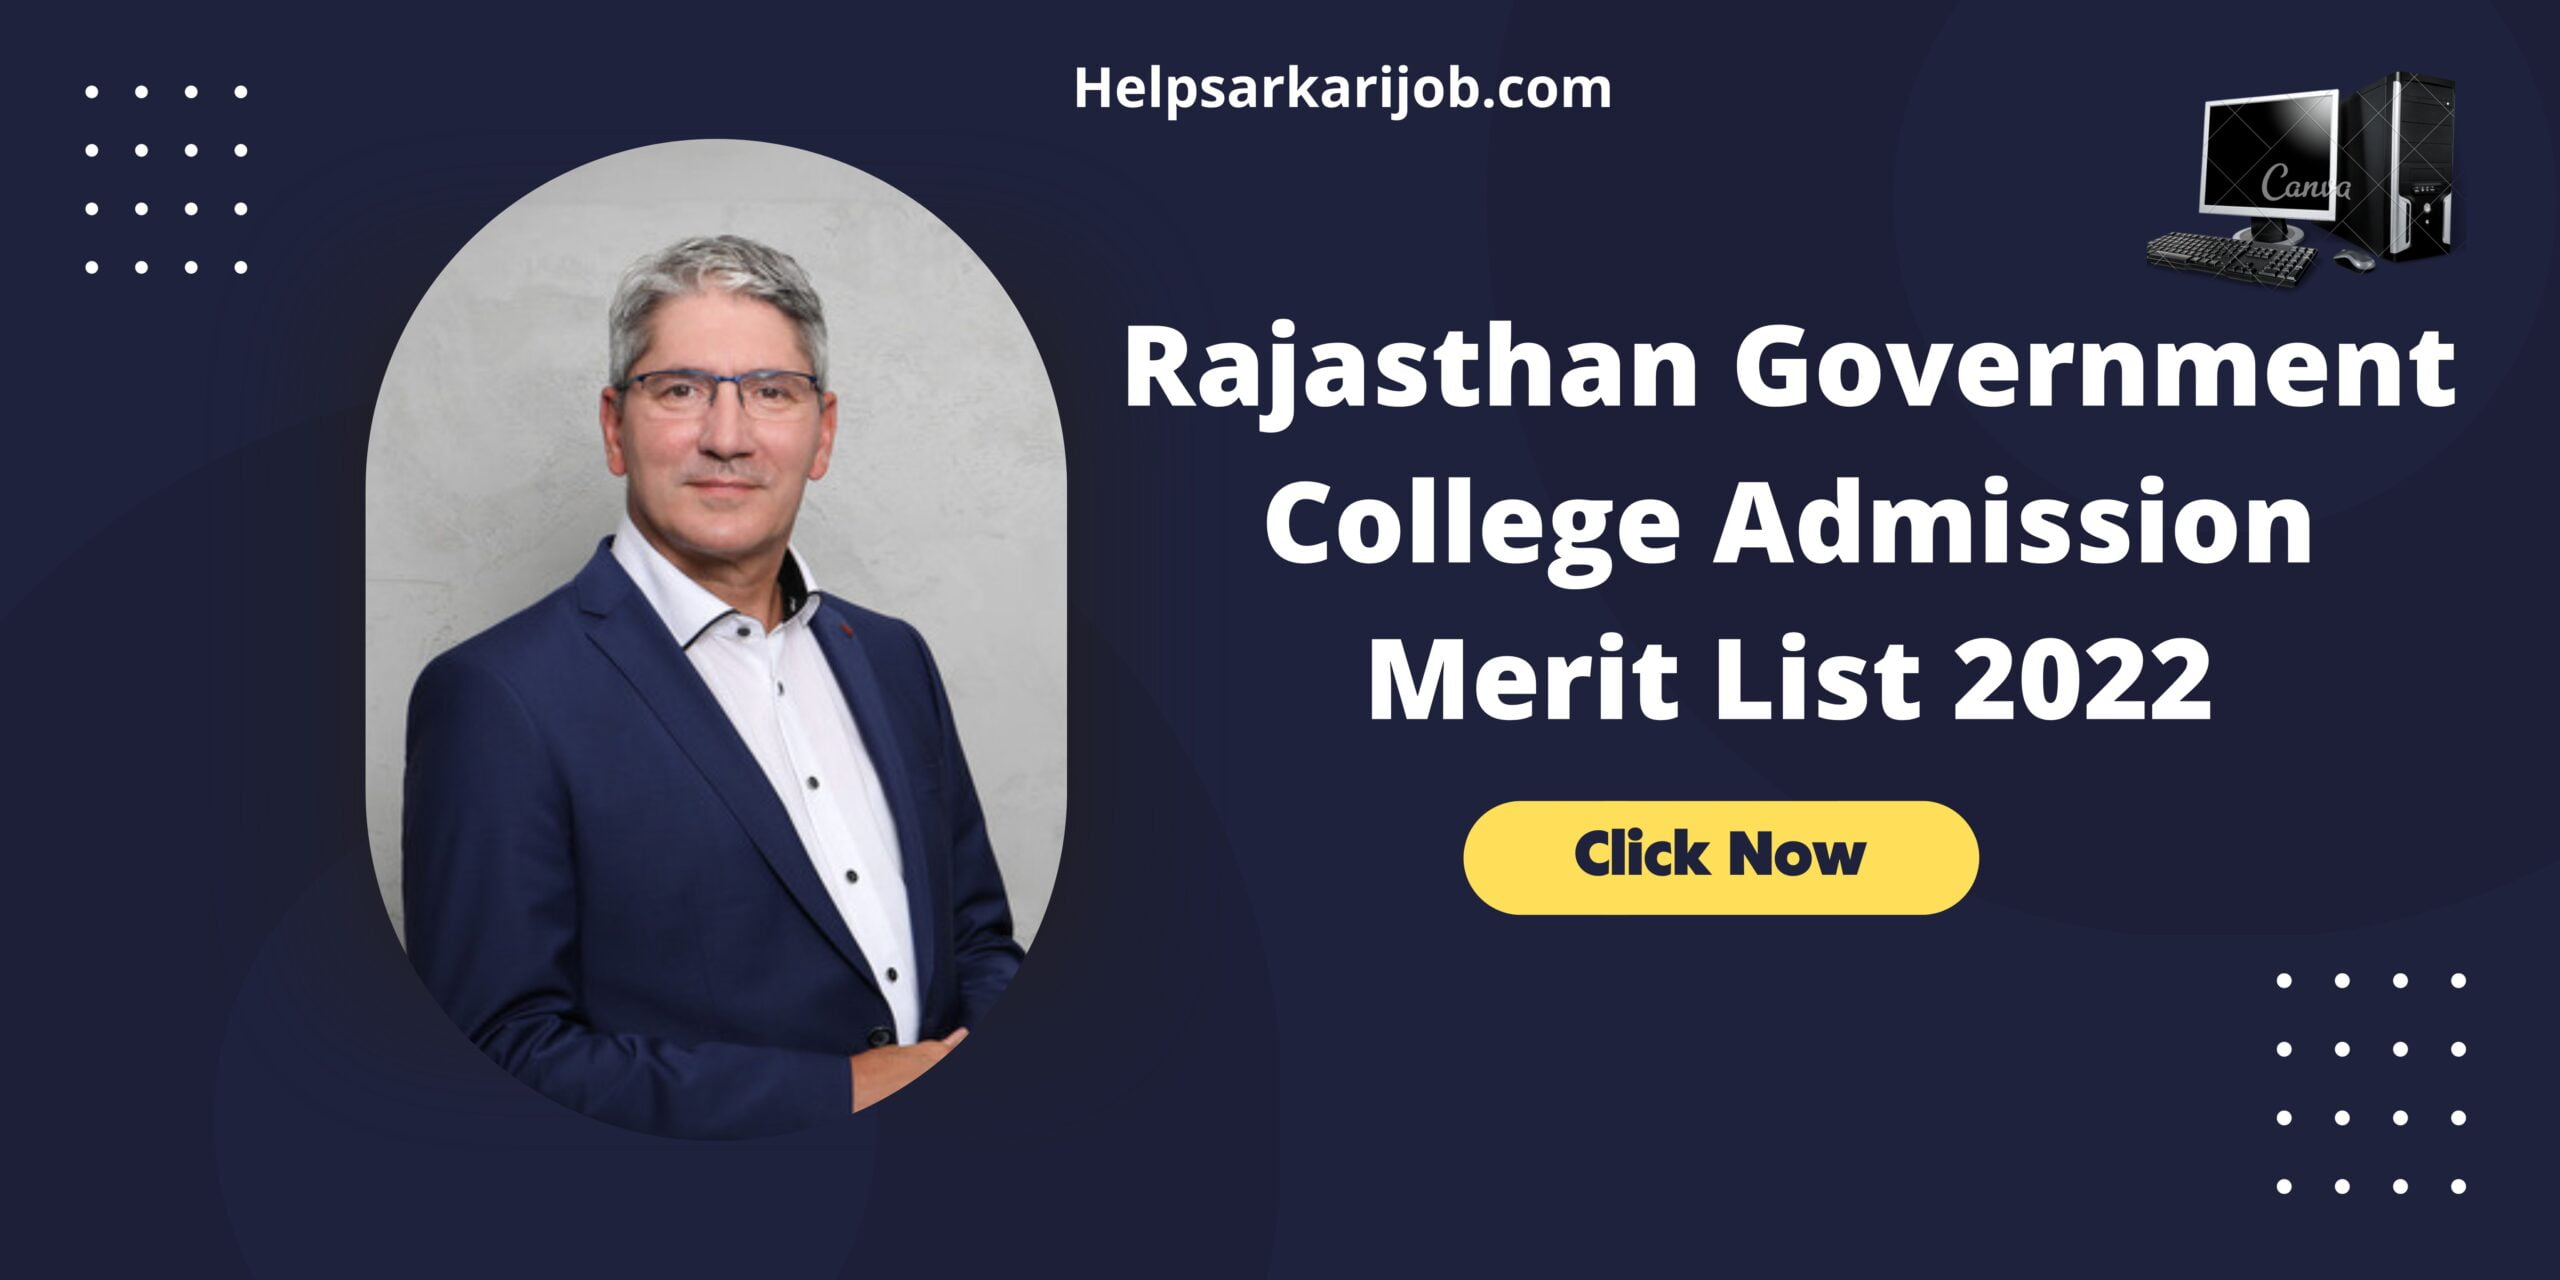 Rajasthan Government College Admission Merit List 2022